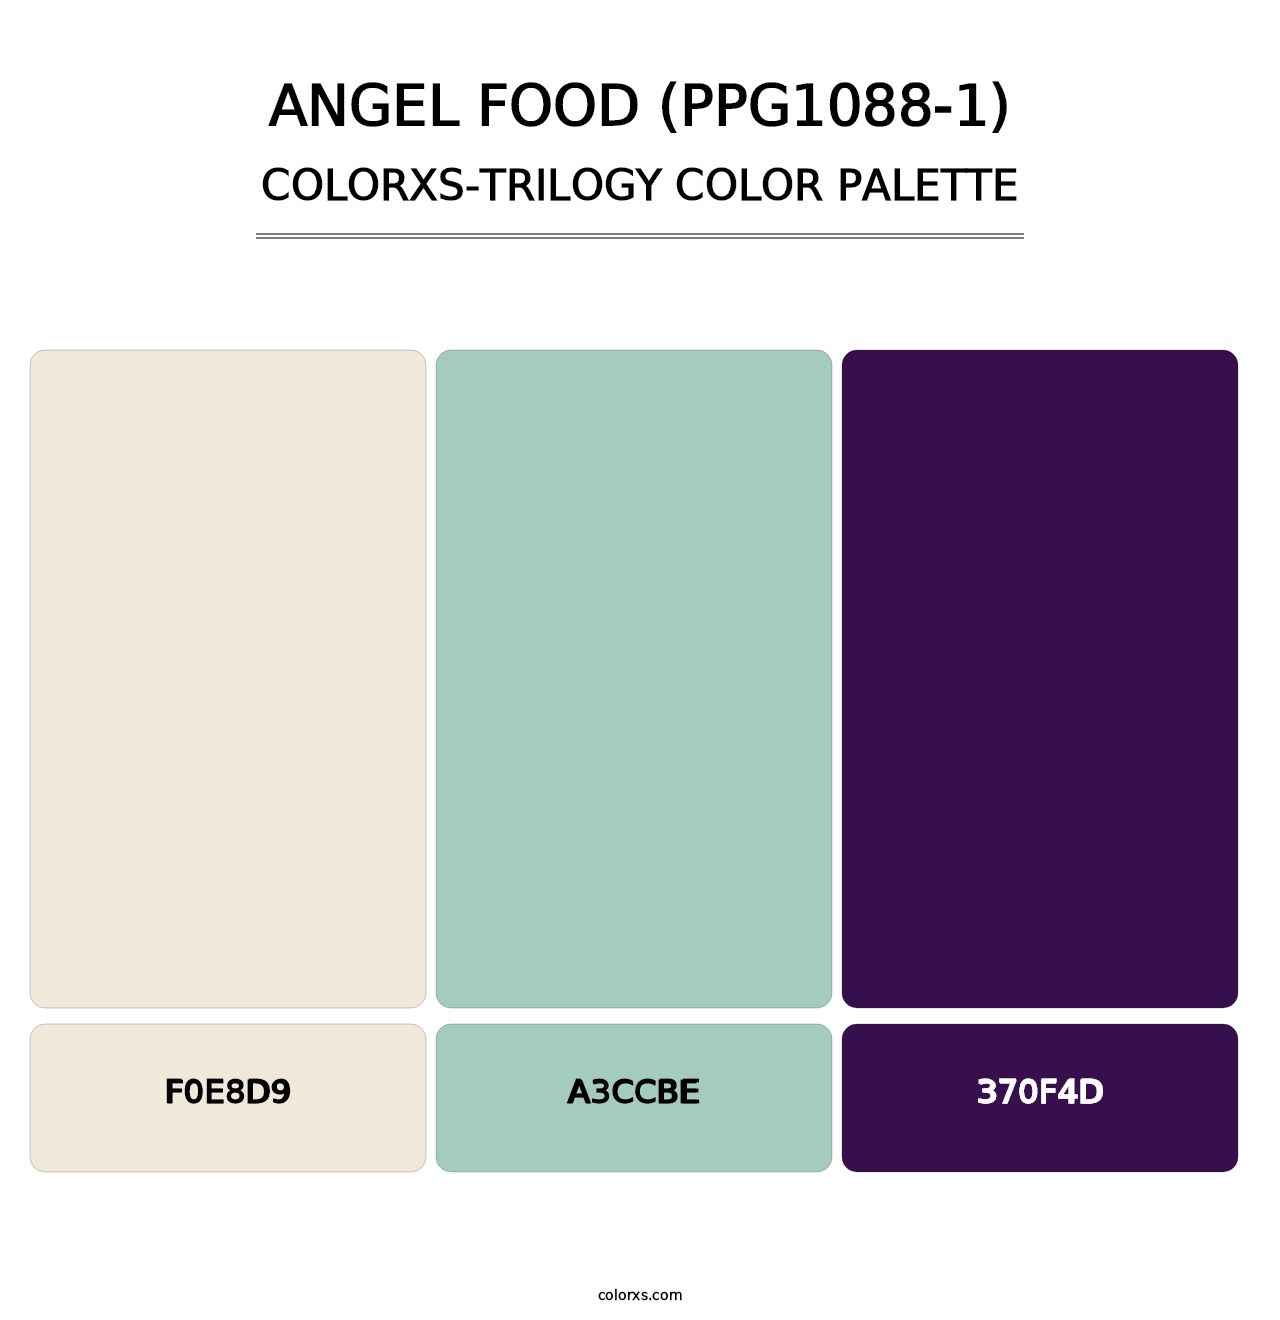 Angel Food (PPG1088-1) - Colorxs Trilogy Palette